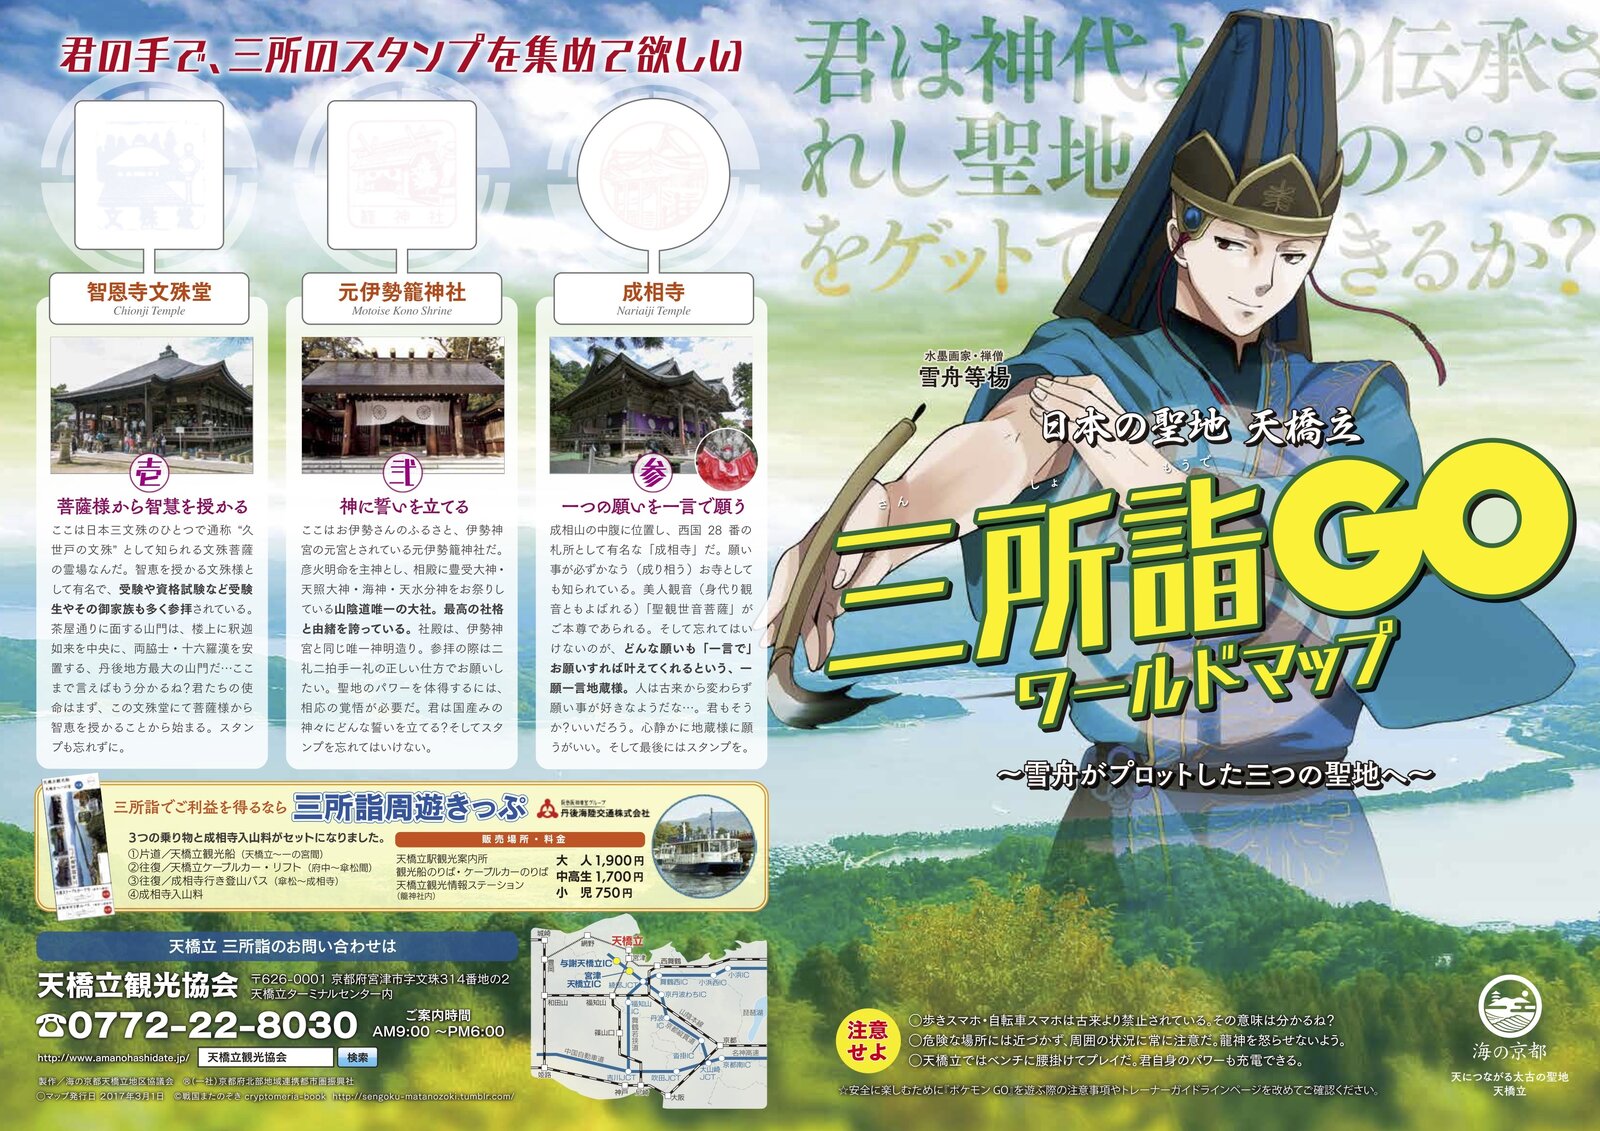 Pokemon Go Teams Up With Kyoto For Amanohashidate Map Japan News Tokyo Otaku Mode Tom Shop Figures Merch From Japan